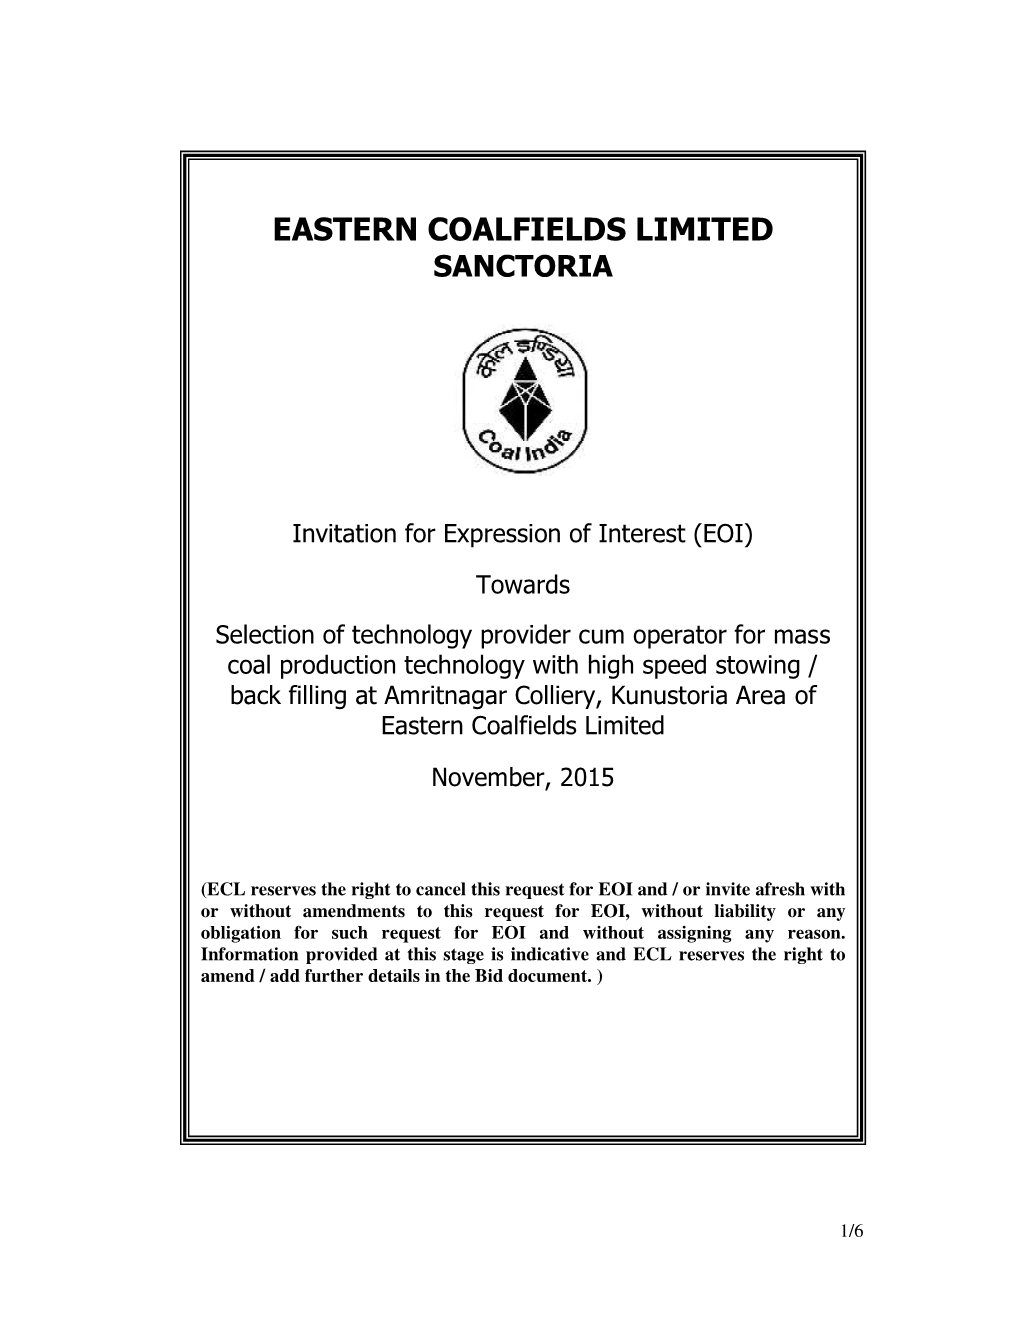 Eastern Coalfields Limited Sanctoria